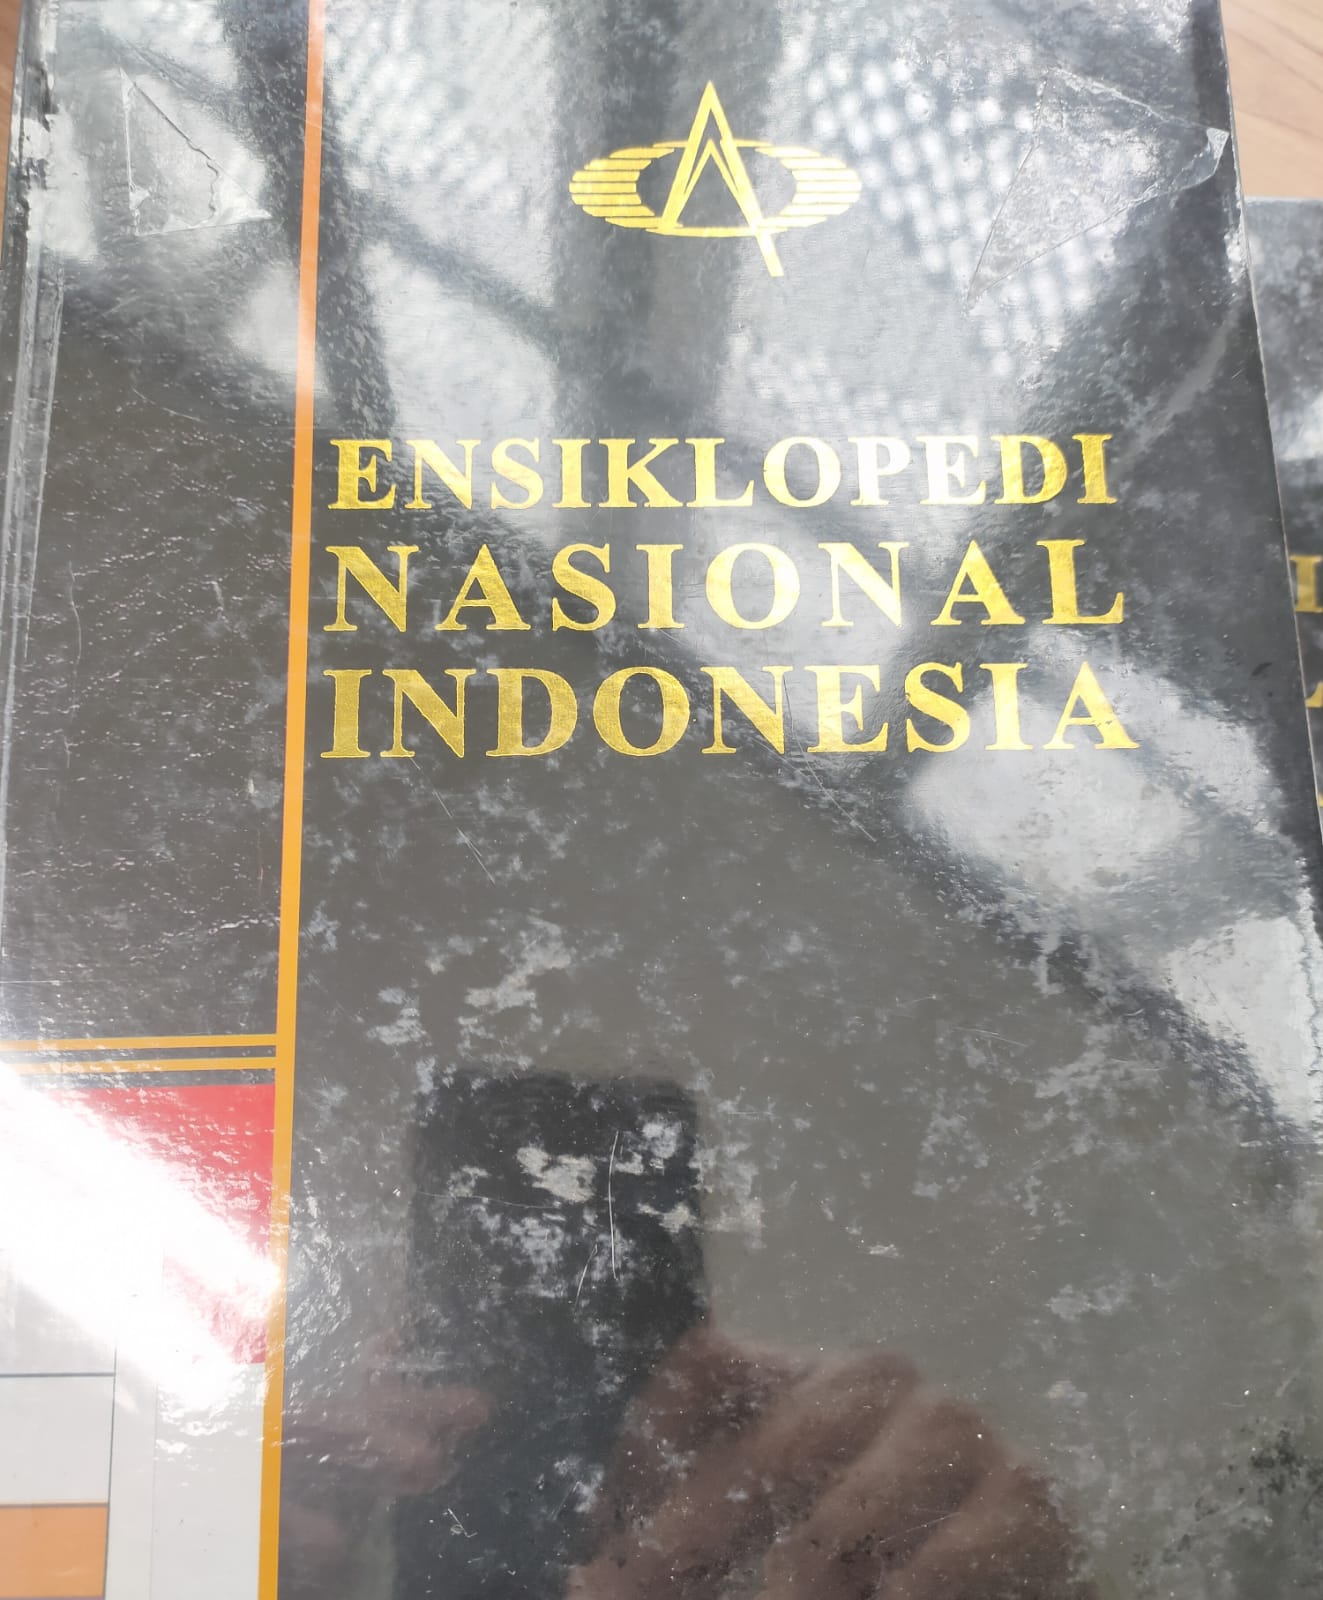 Ensiklopedi nasional Indonesia jilid 9 kl-lysit